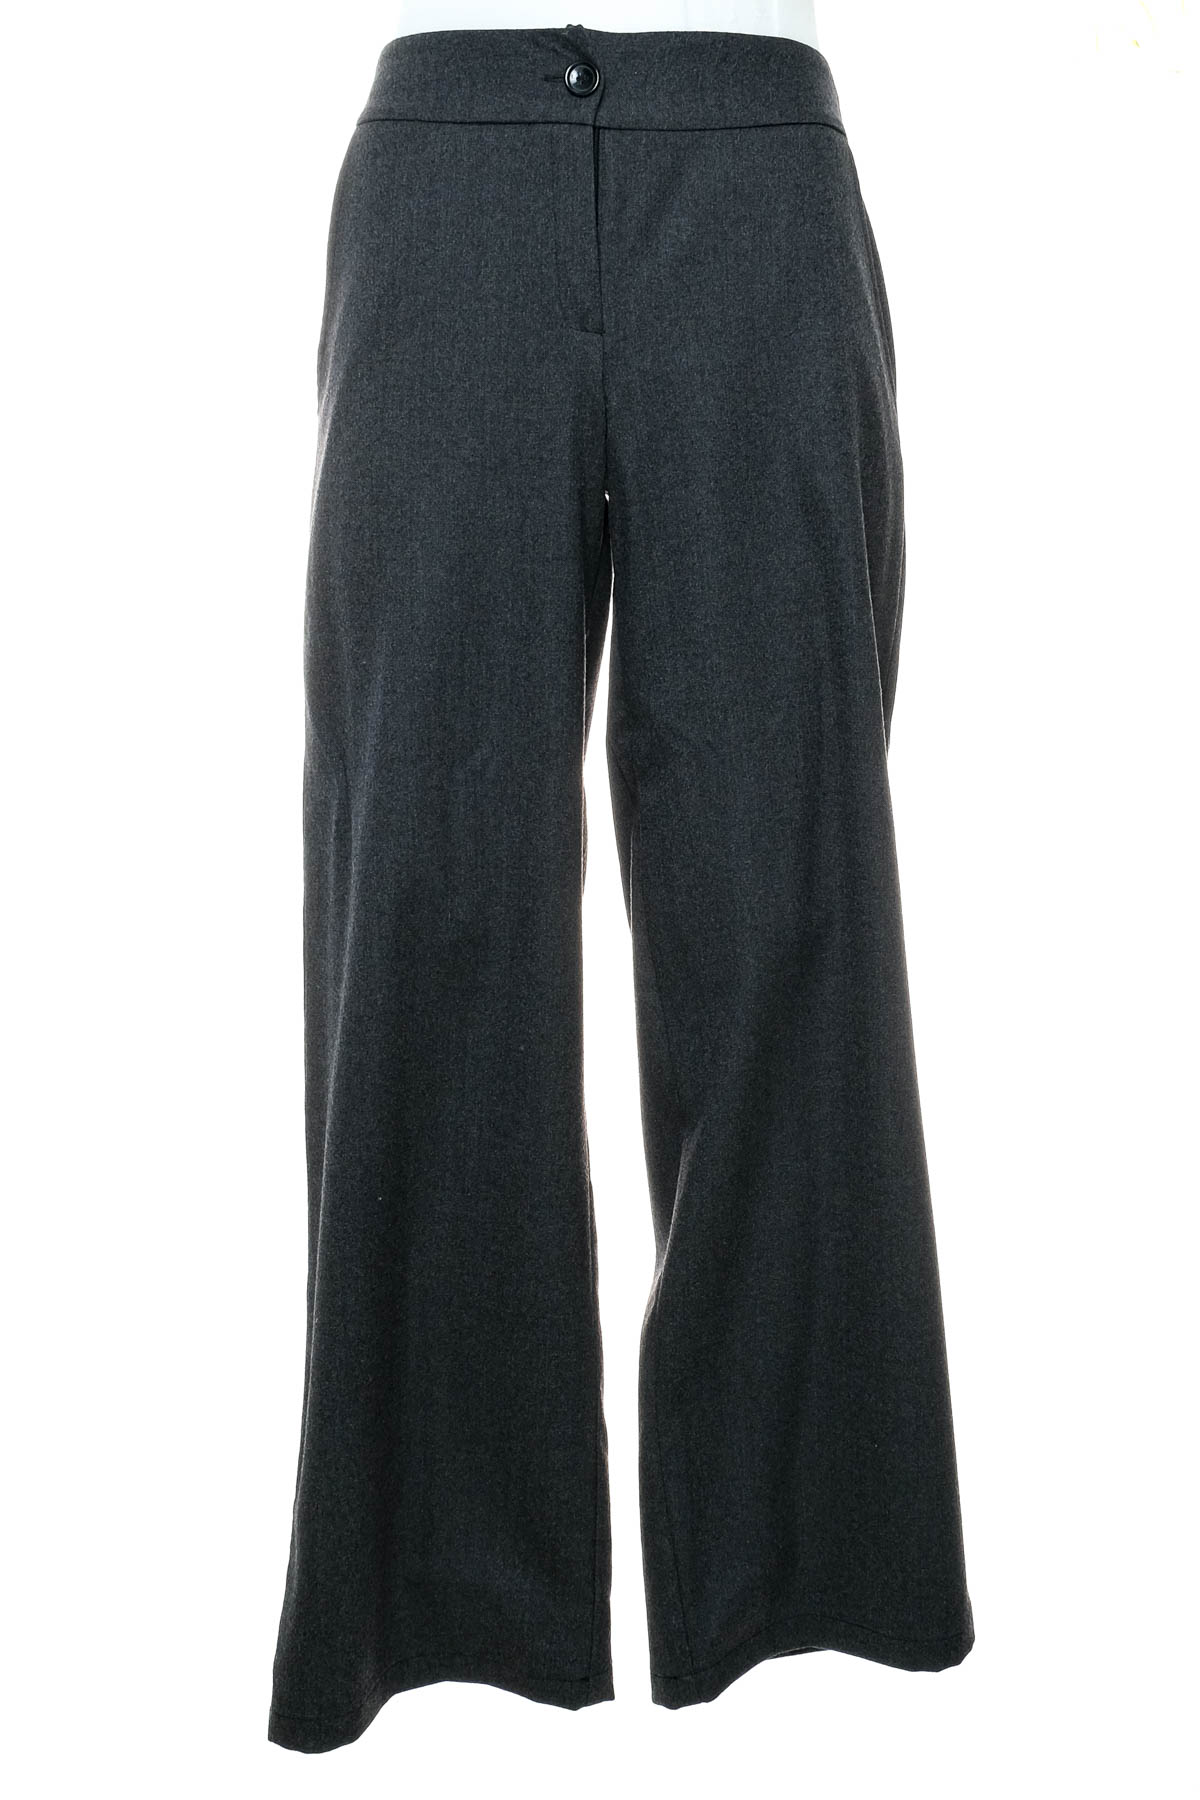 Women's trousers - METAMORPHOZA - 0